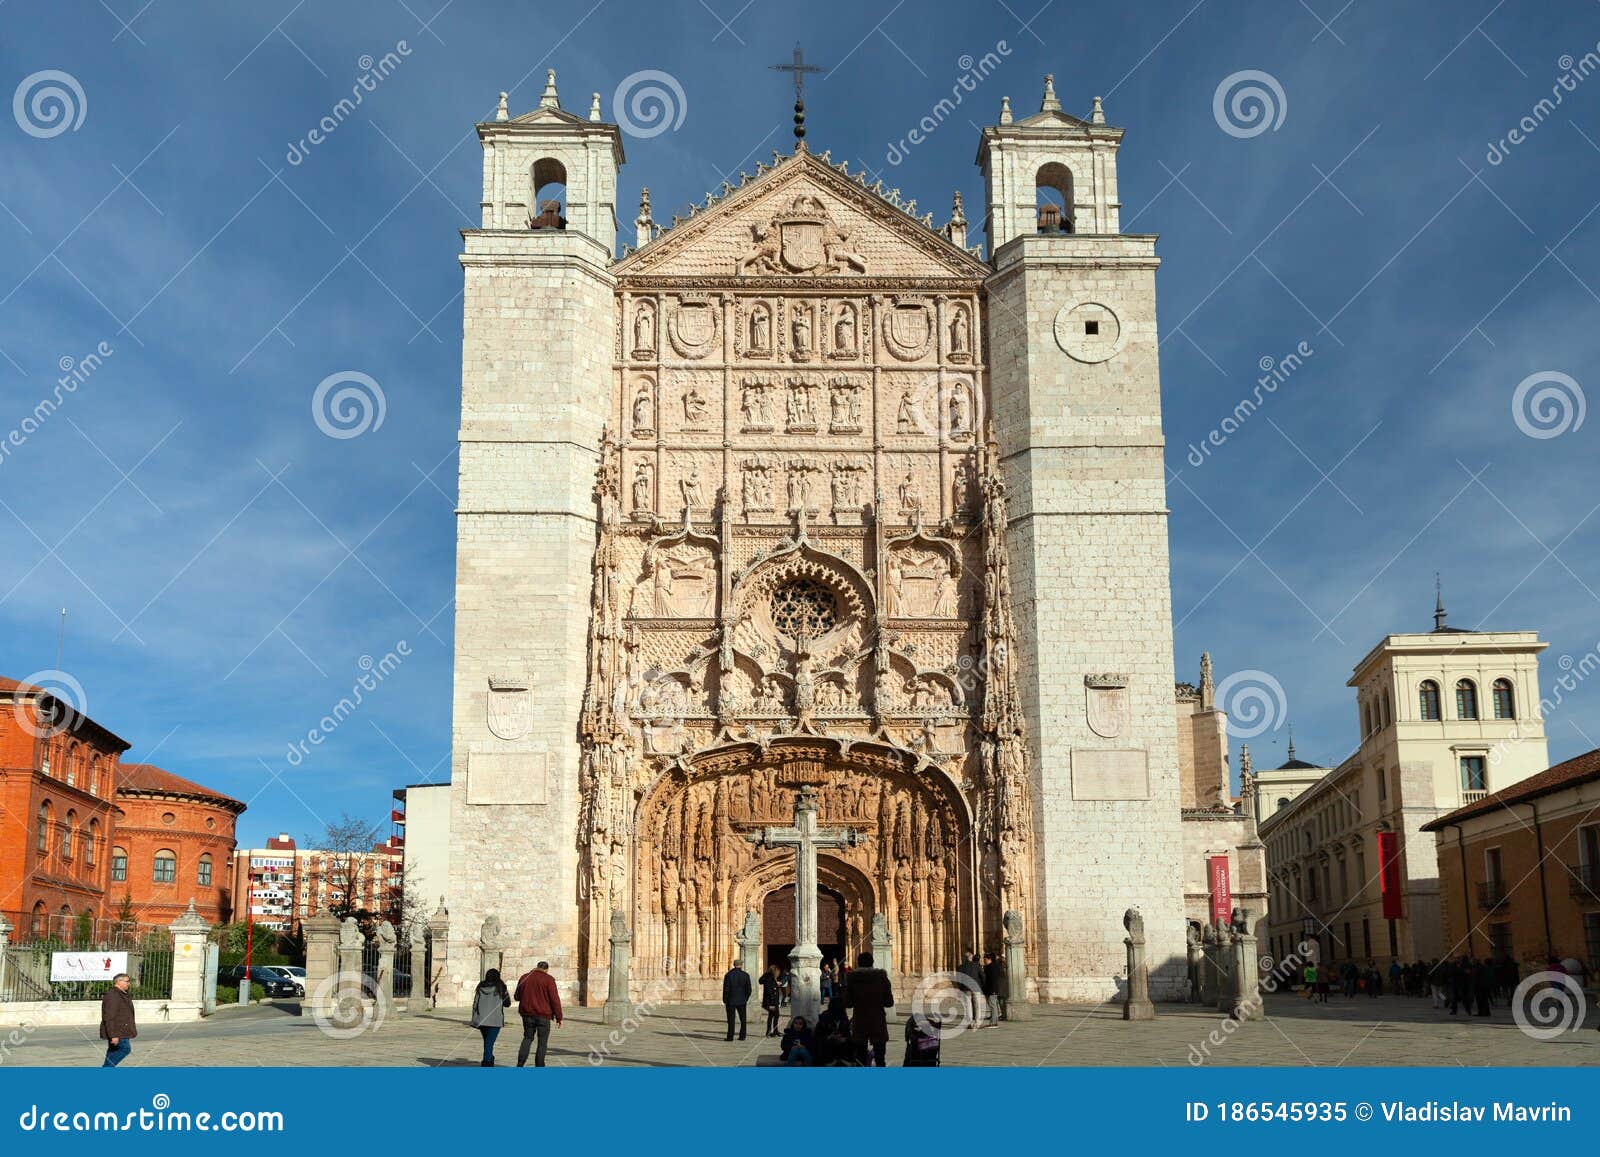 Iglesia De San Pablo, Valladolid, Spain Editorial Image - Image of travel,  catholic: 186545935